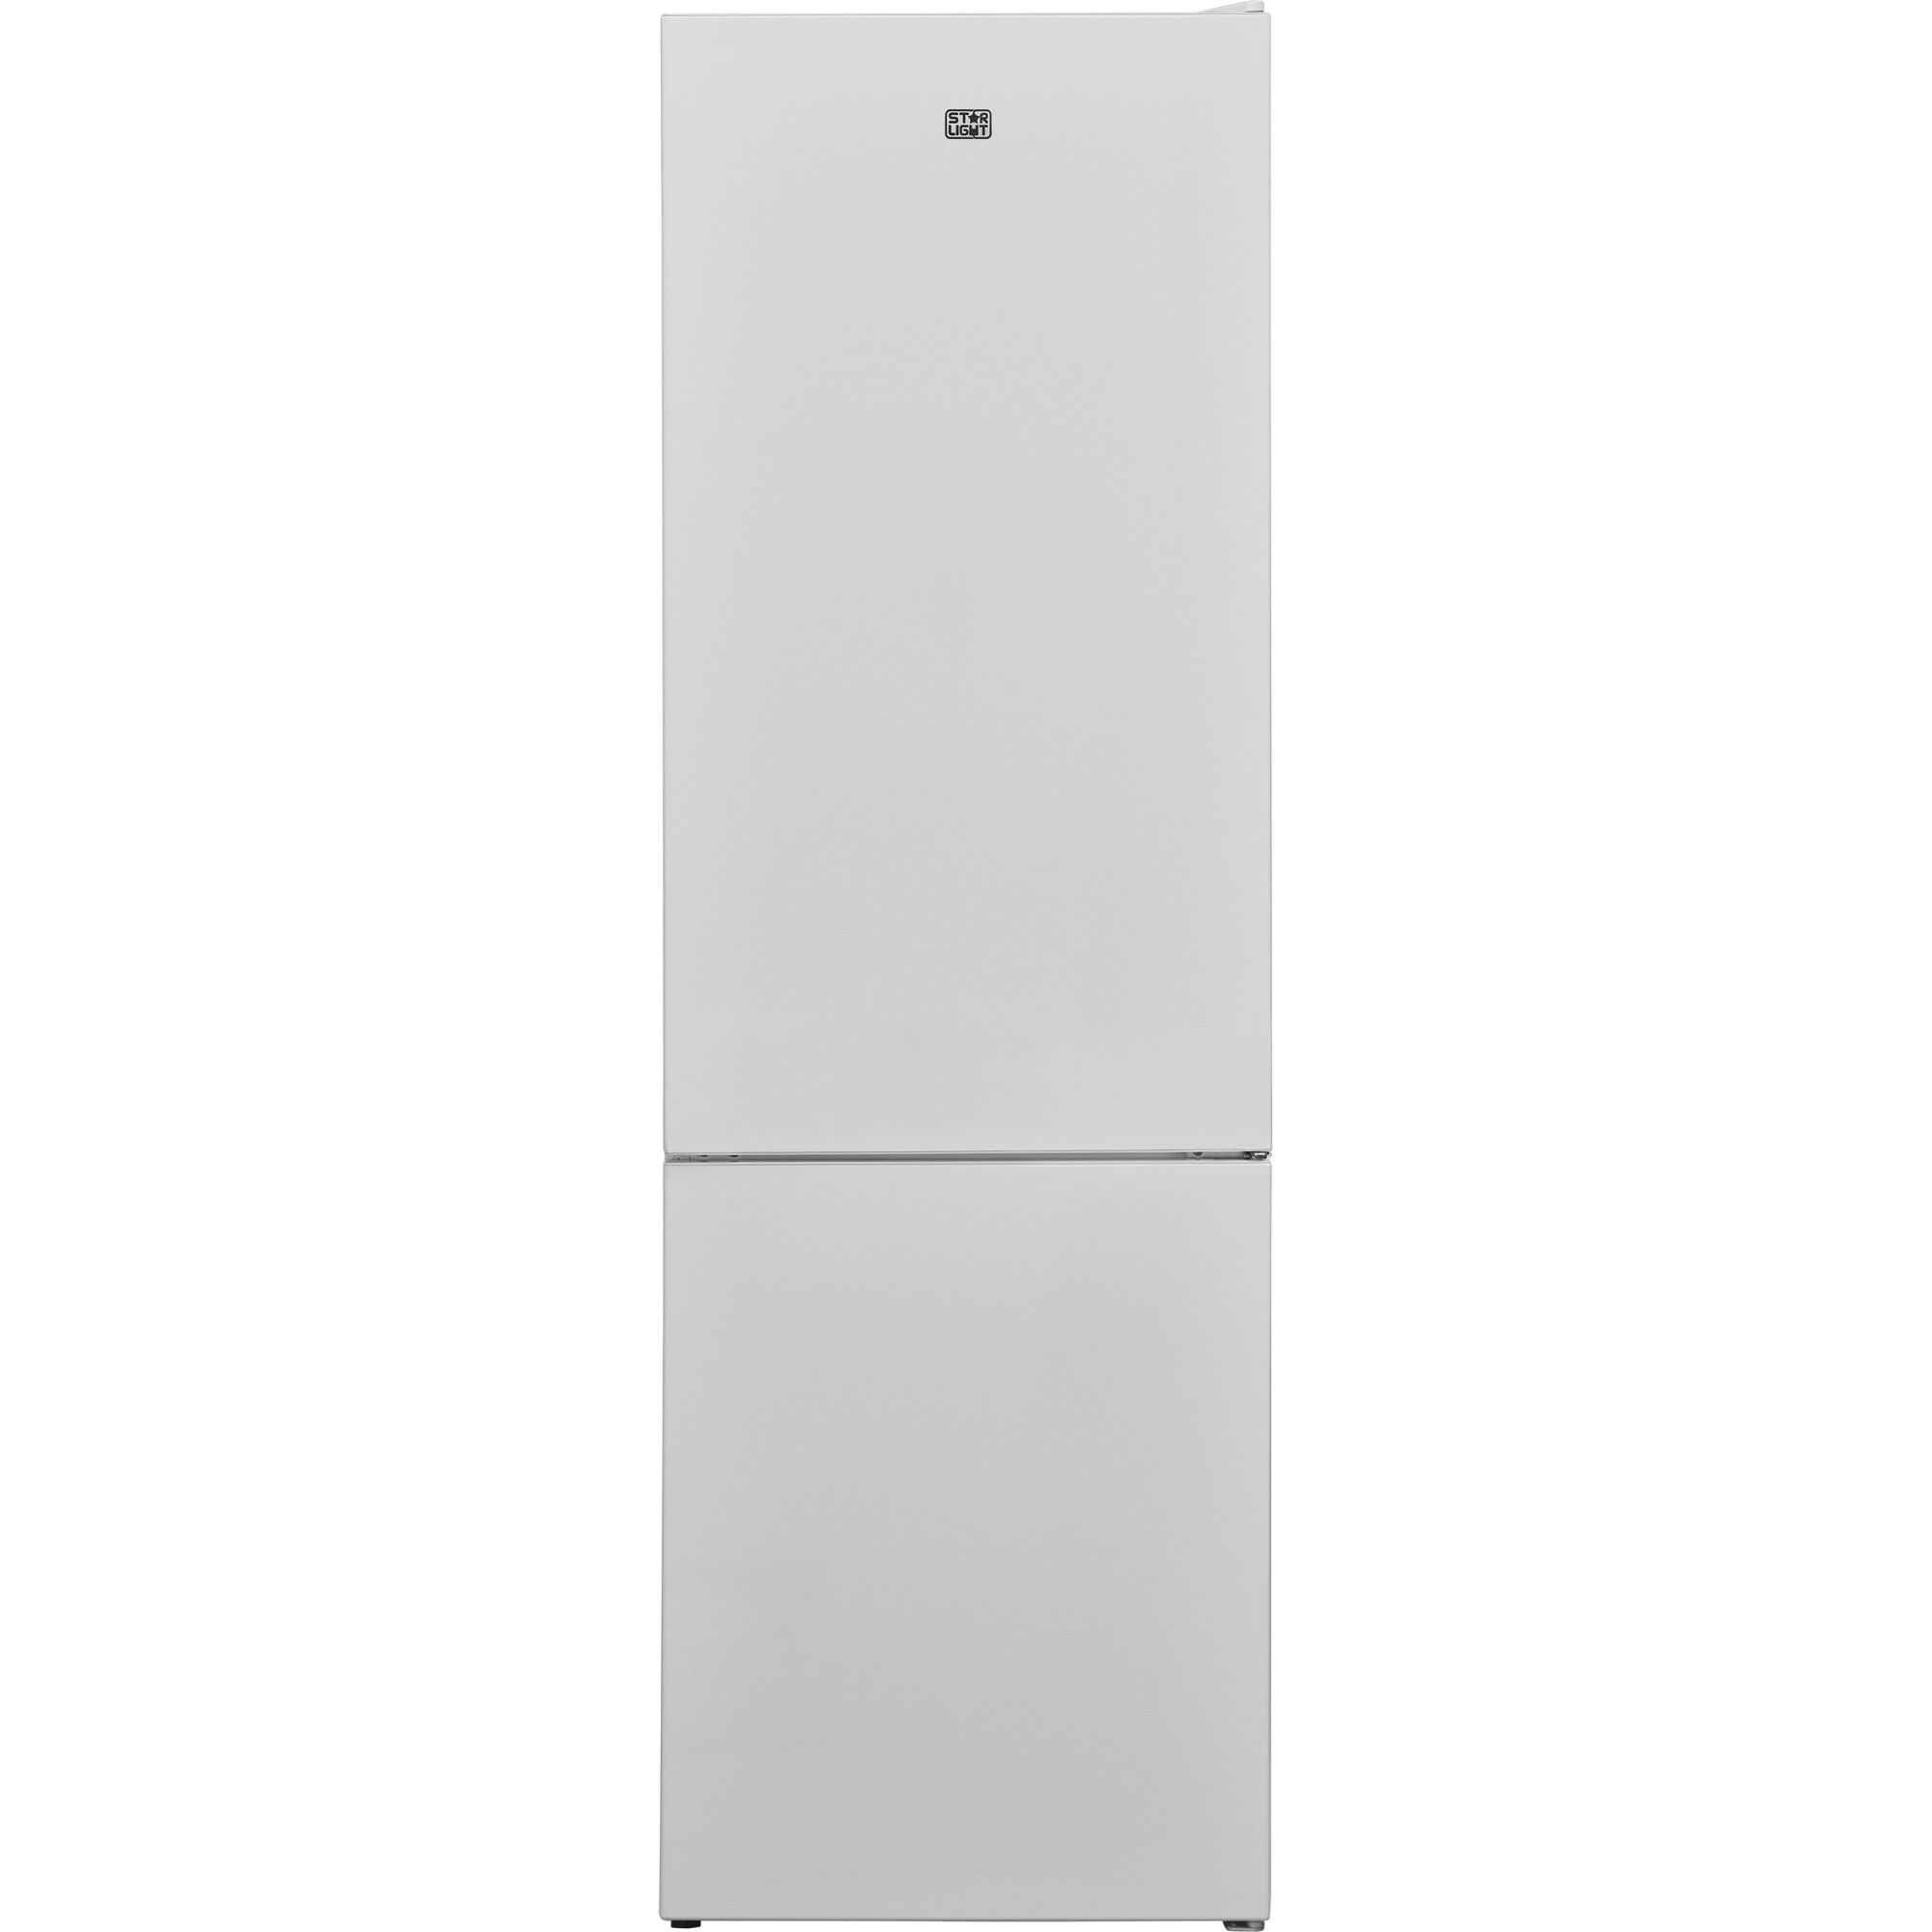 Хладилник с фризер Star-Light CRFV-286A+, 286 l, Клас A+, H 180 см, Бял